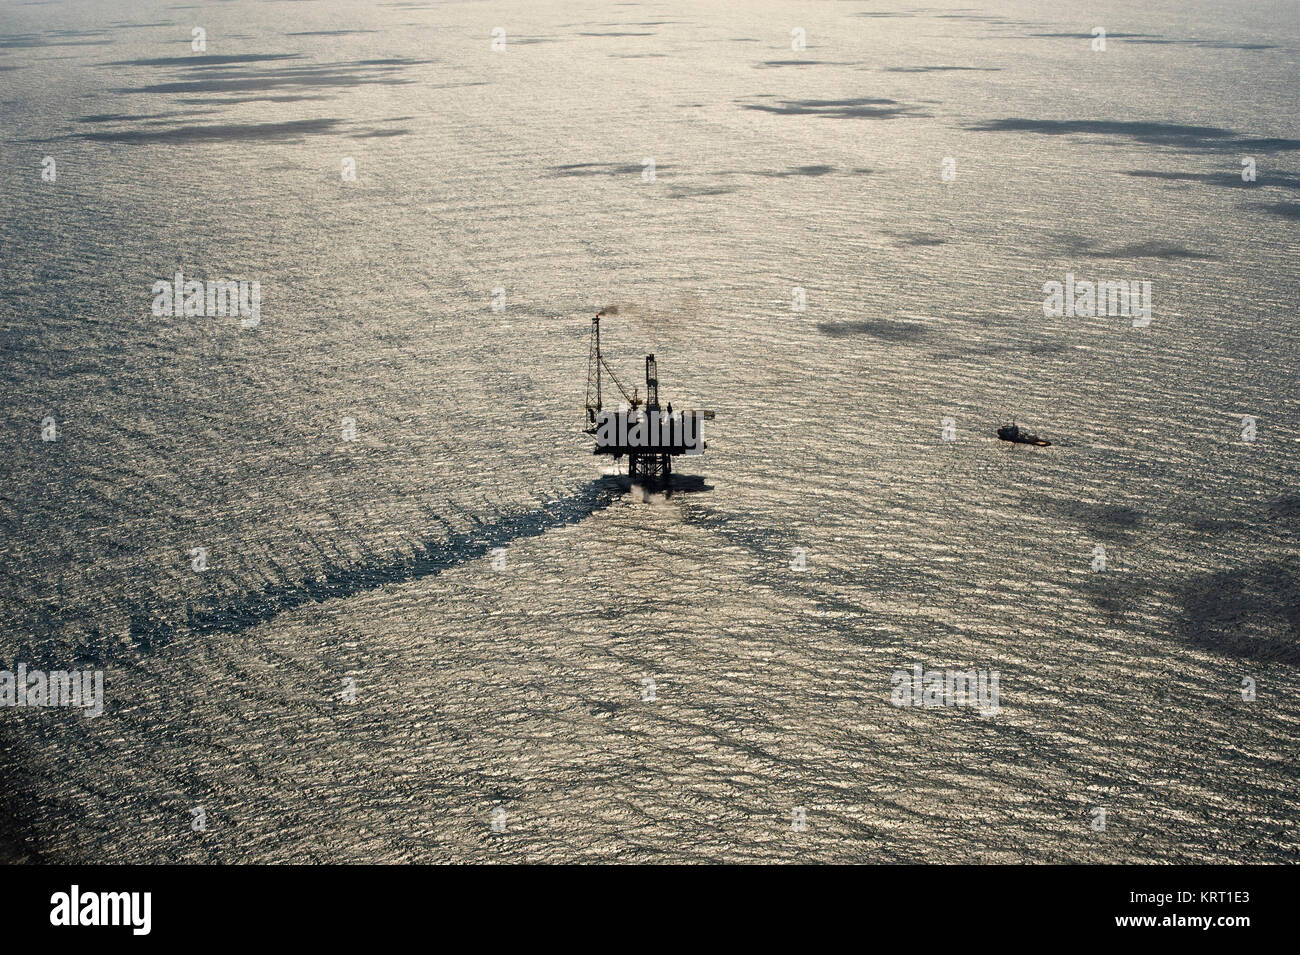 Erdöl-Feld. Oelfoerdergebiet in der Nordsee. Schoen sieht es aus. Industriegebiet Foto Stock